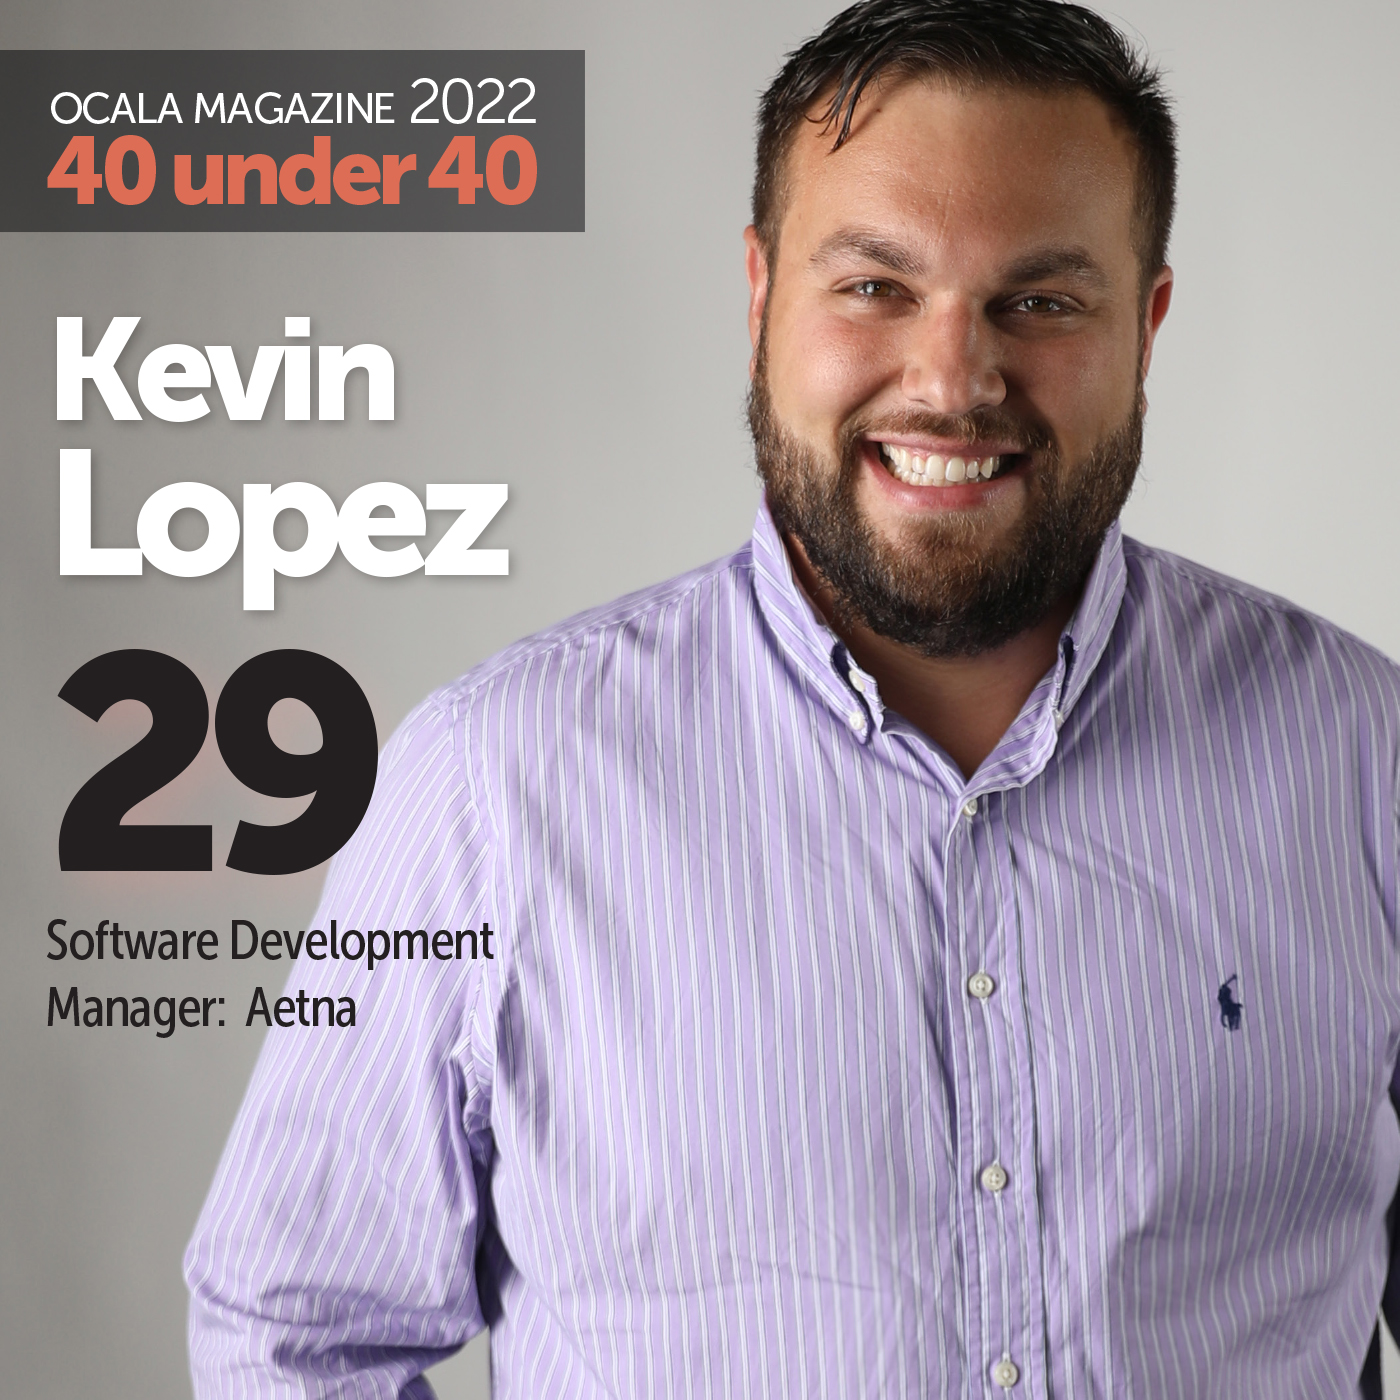 Kevin Lopez Ocala Magazine 2022 40 under 40